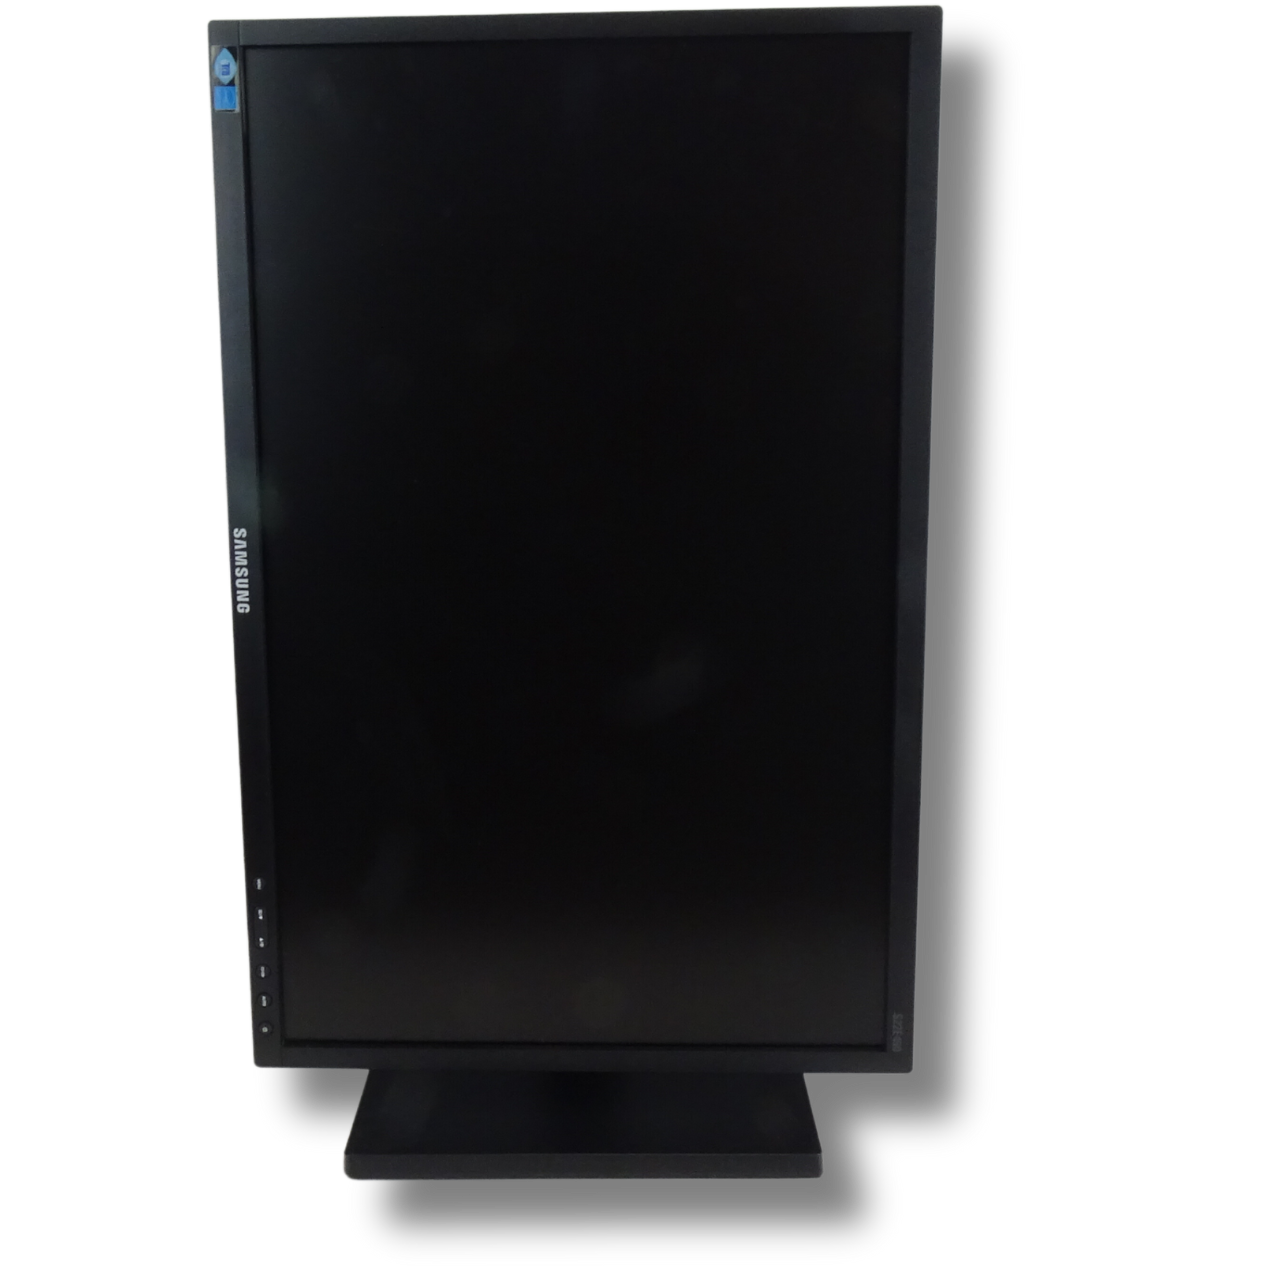 Samsung Color Display Unit S22E450BW - 22,0 Zoll - 1680 x 1050 WSXGA+ - 5 ms - Schwarz - Sehr gut